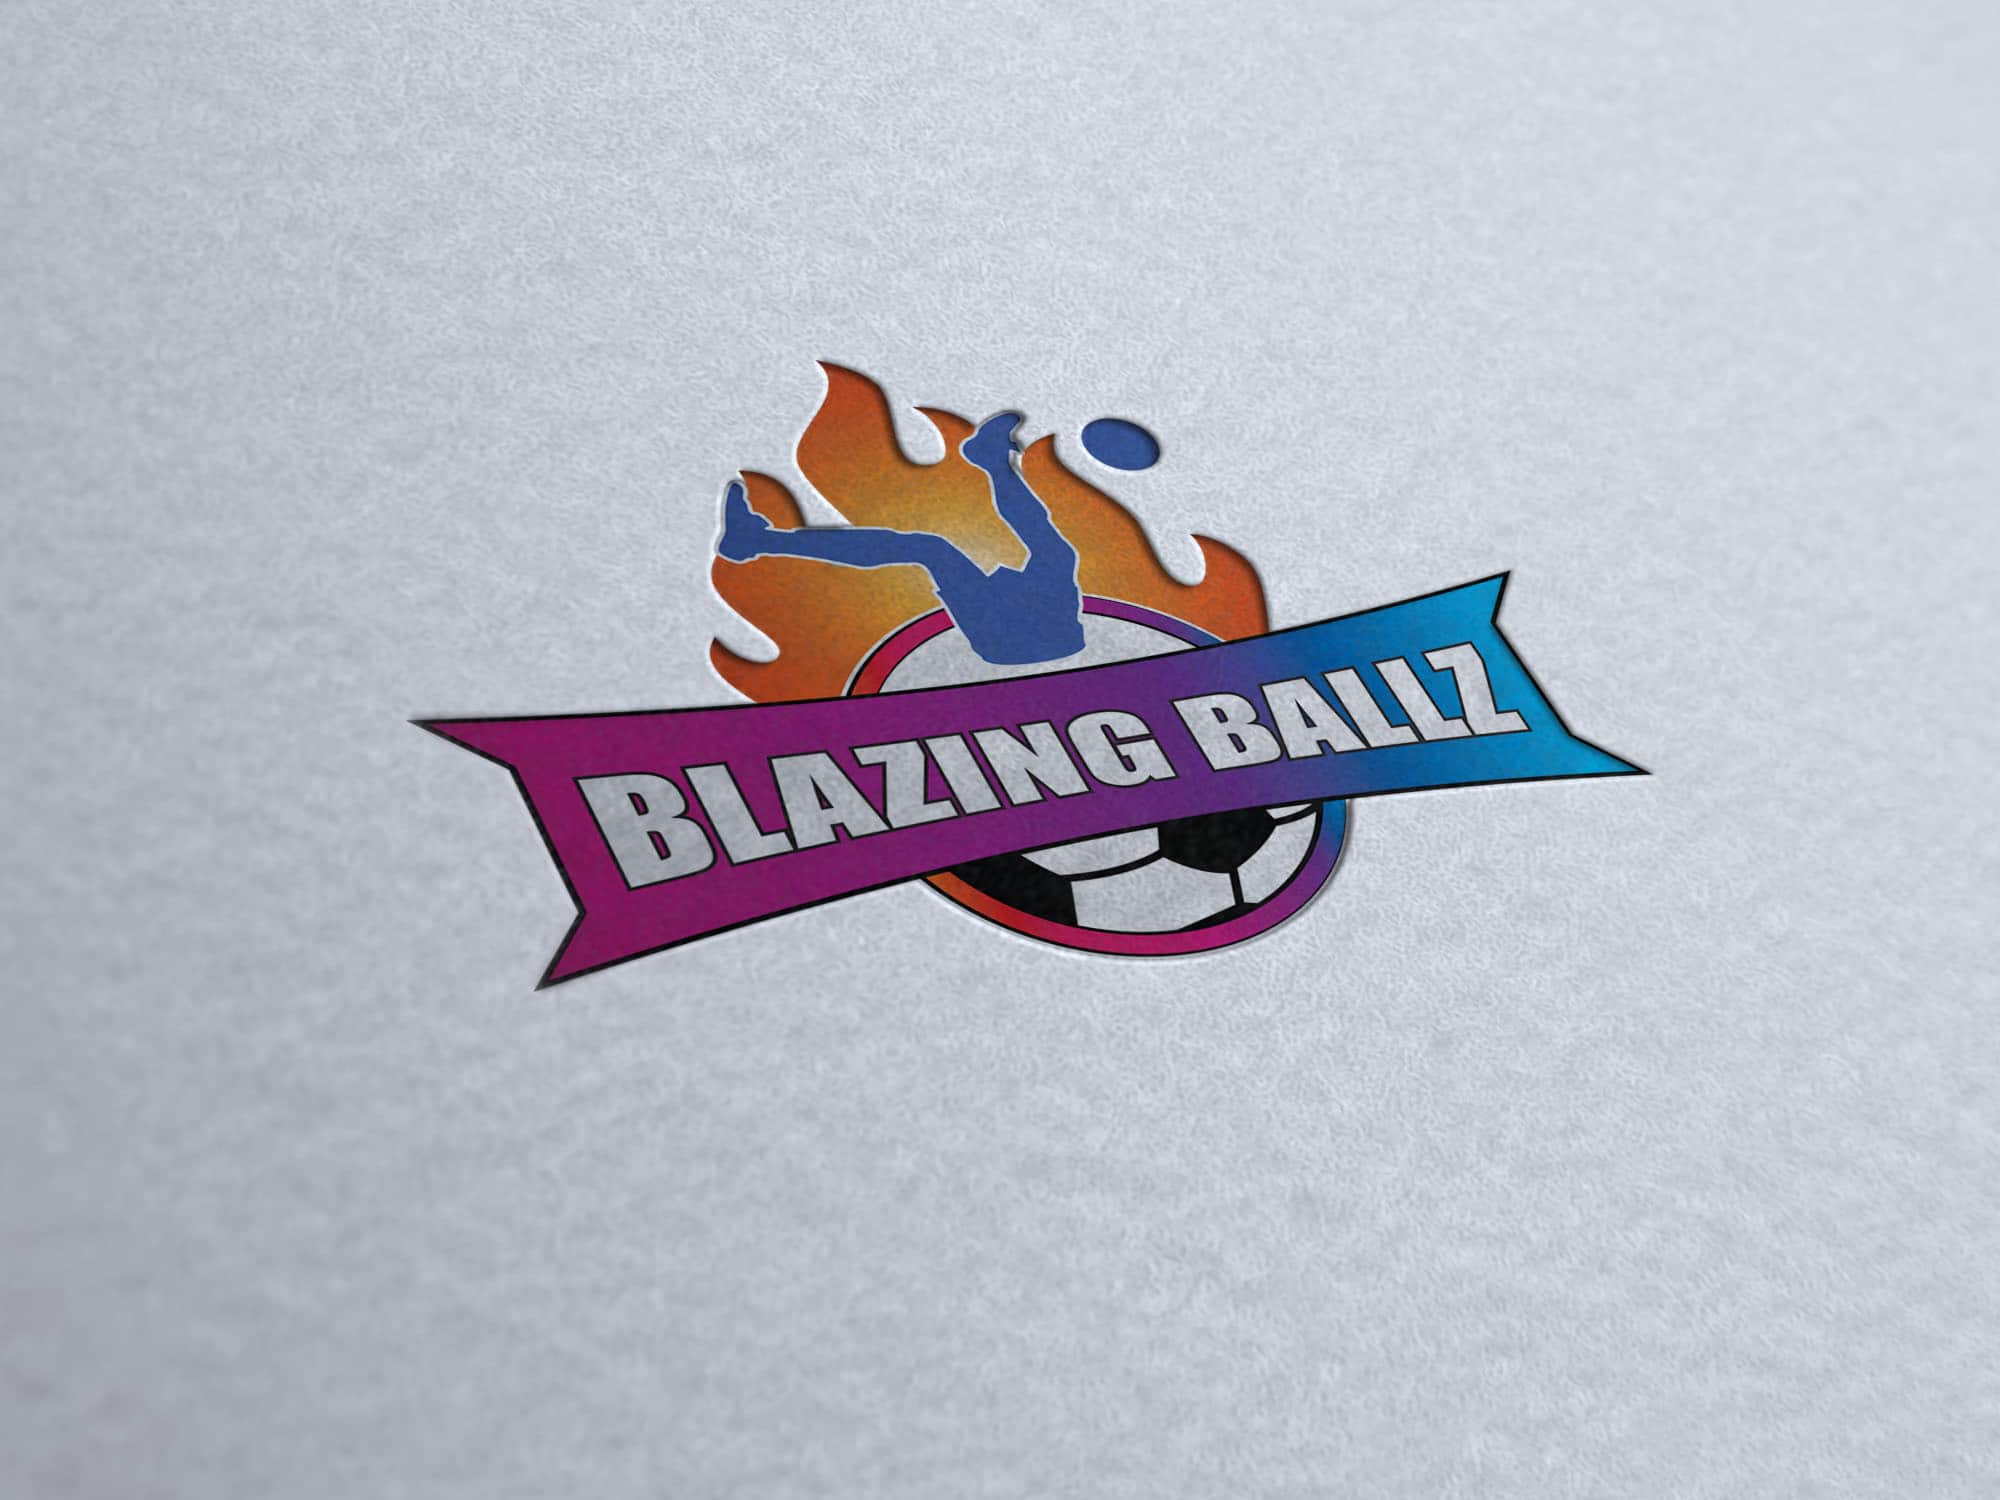 Blazing Balls Logo Design